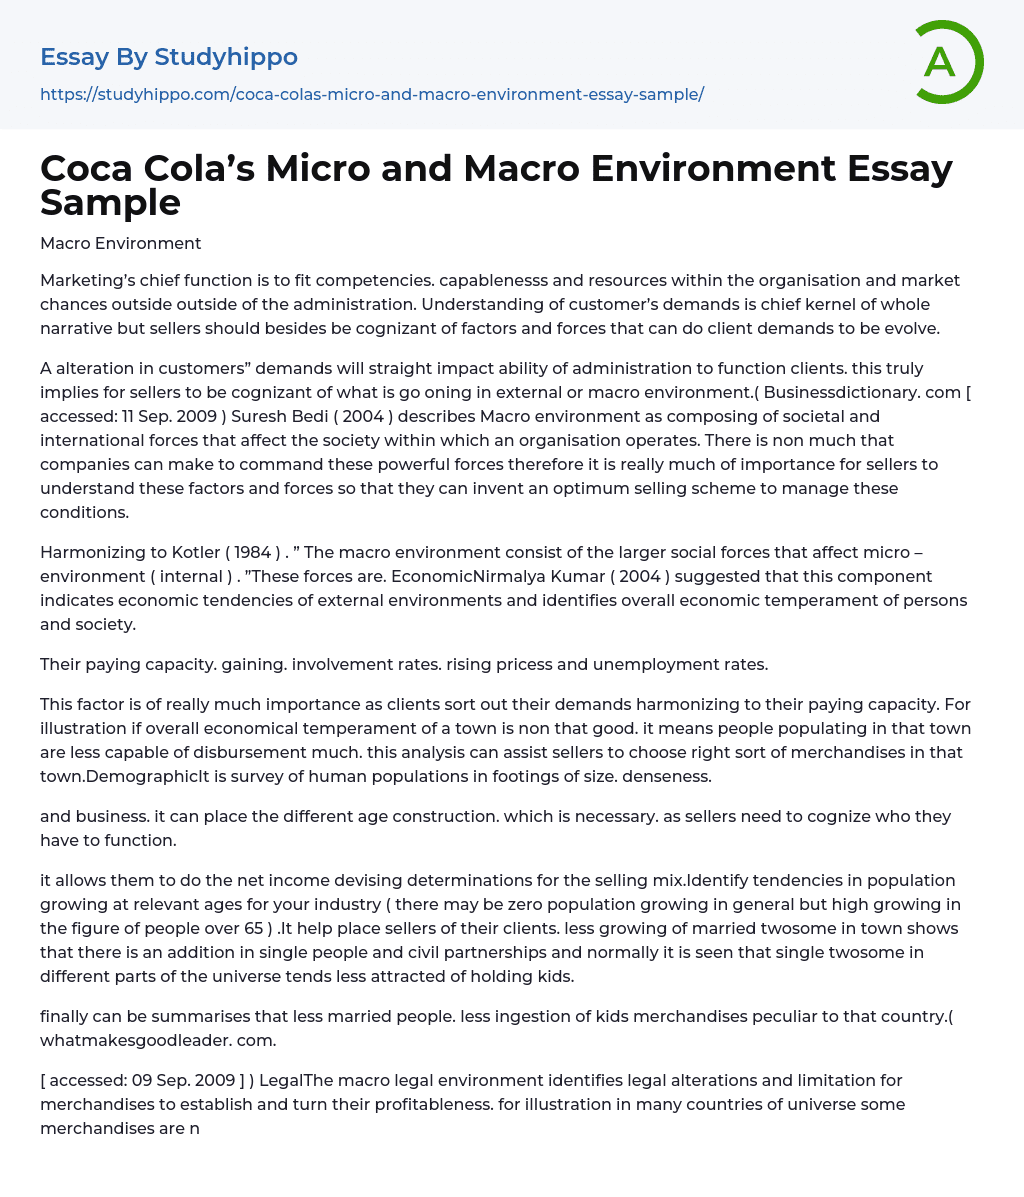 Coca Cola’s Micro and Macro Environment Essay Sample